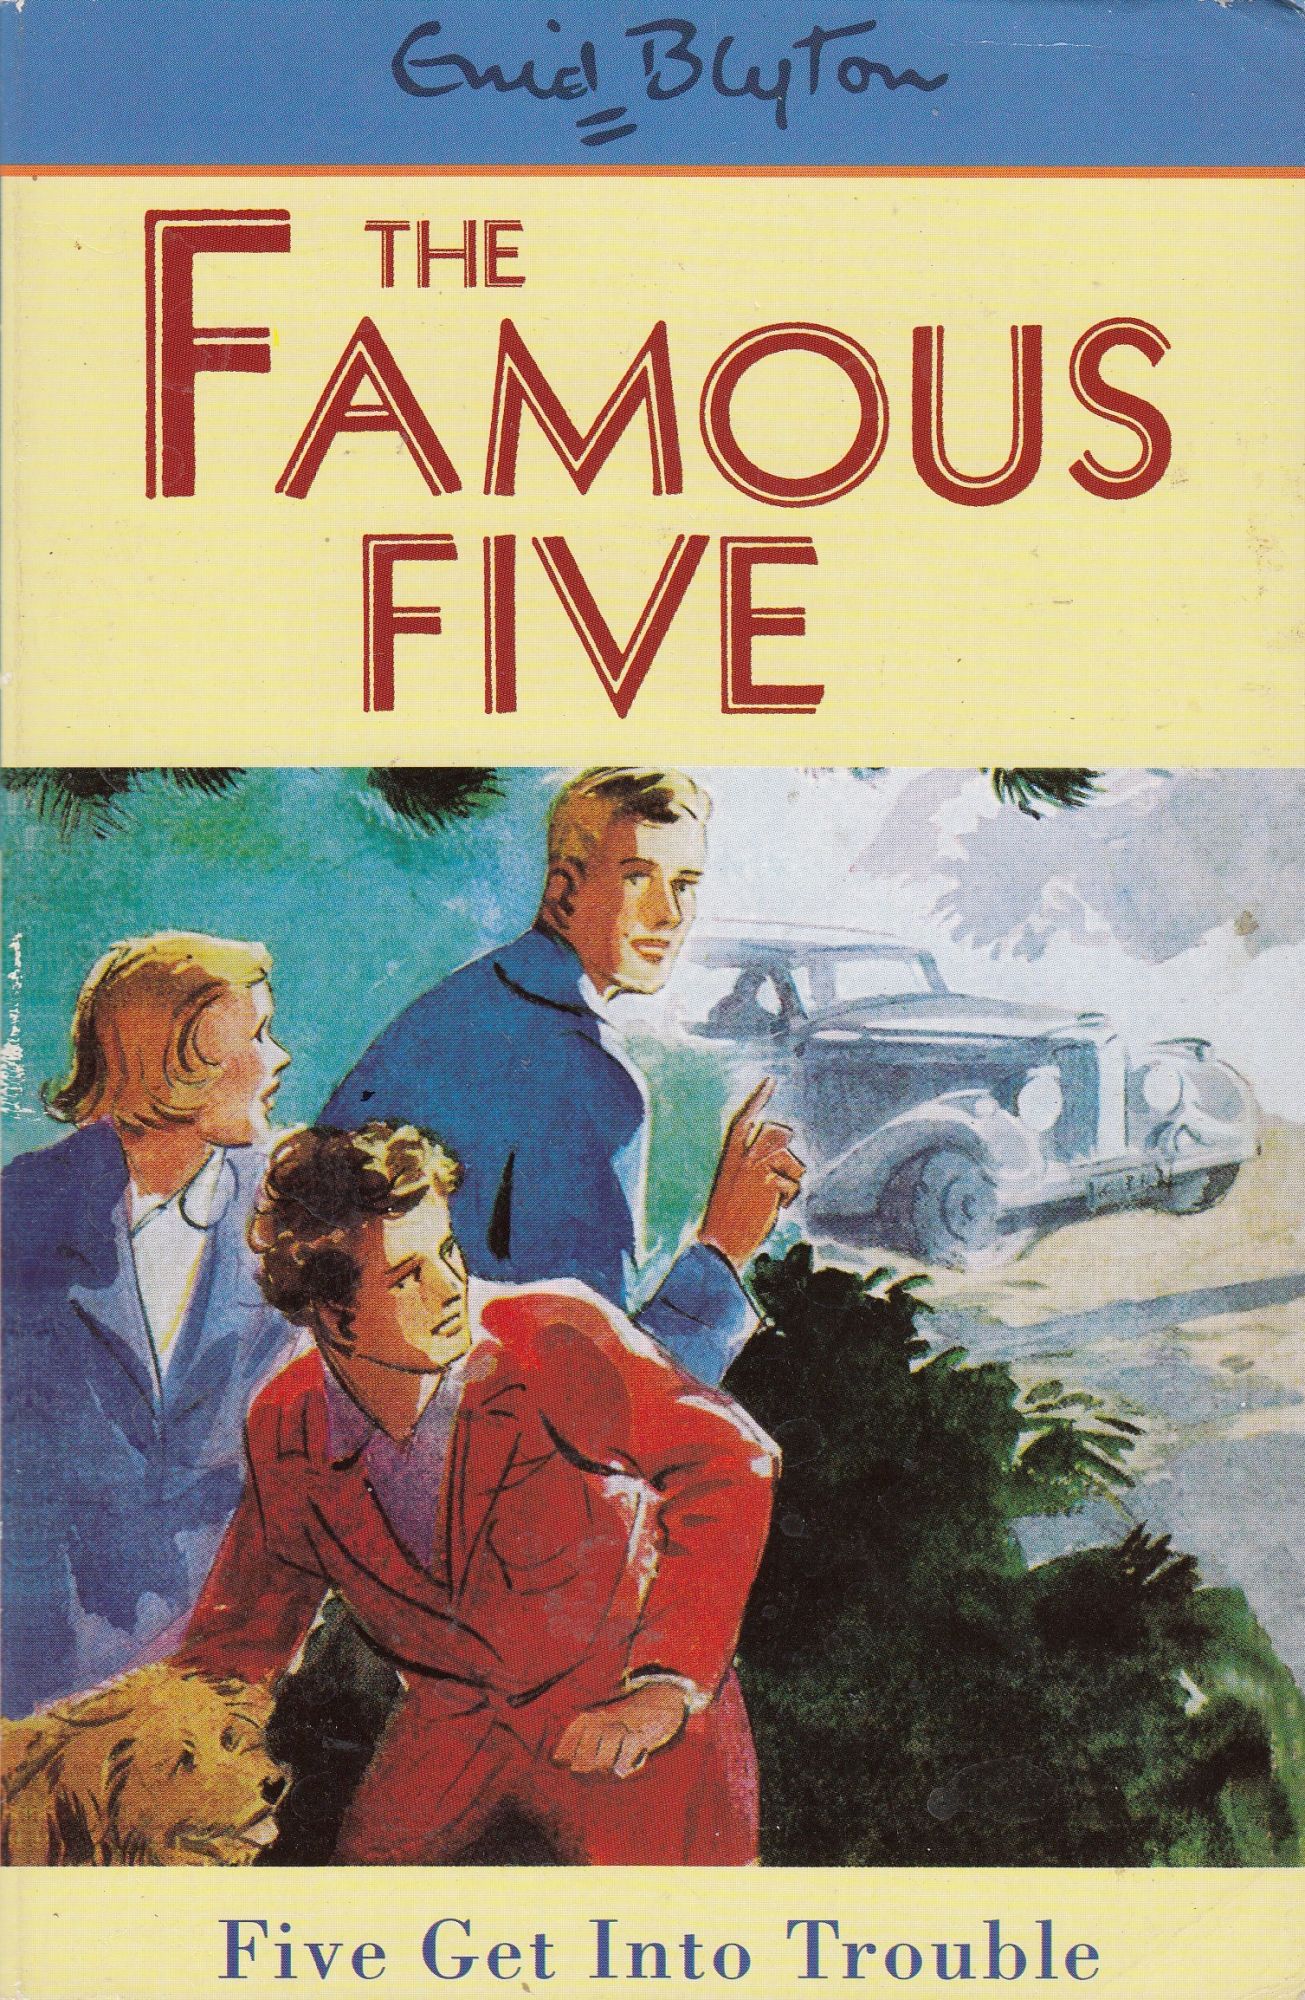 The Famouse Five  -  Enid Blyton